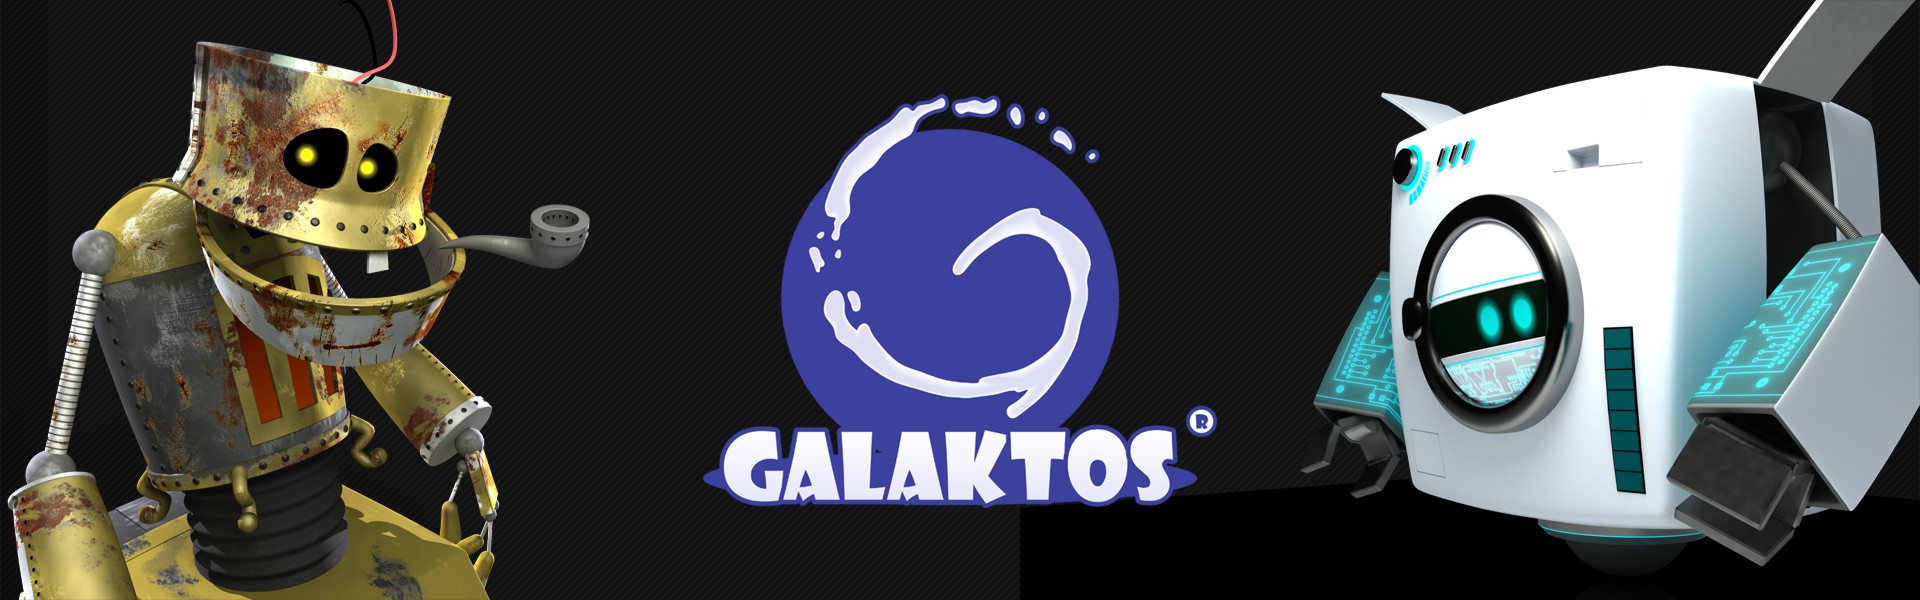 Galtaktos